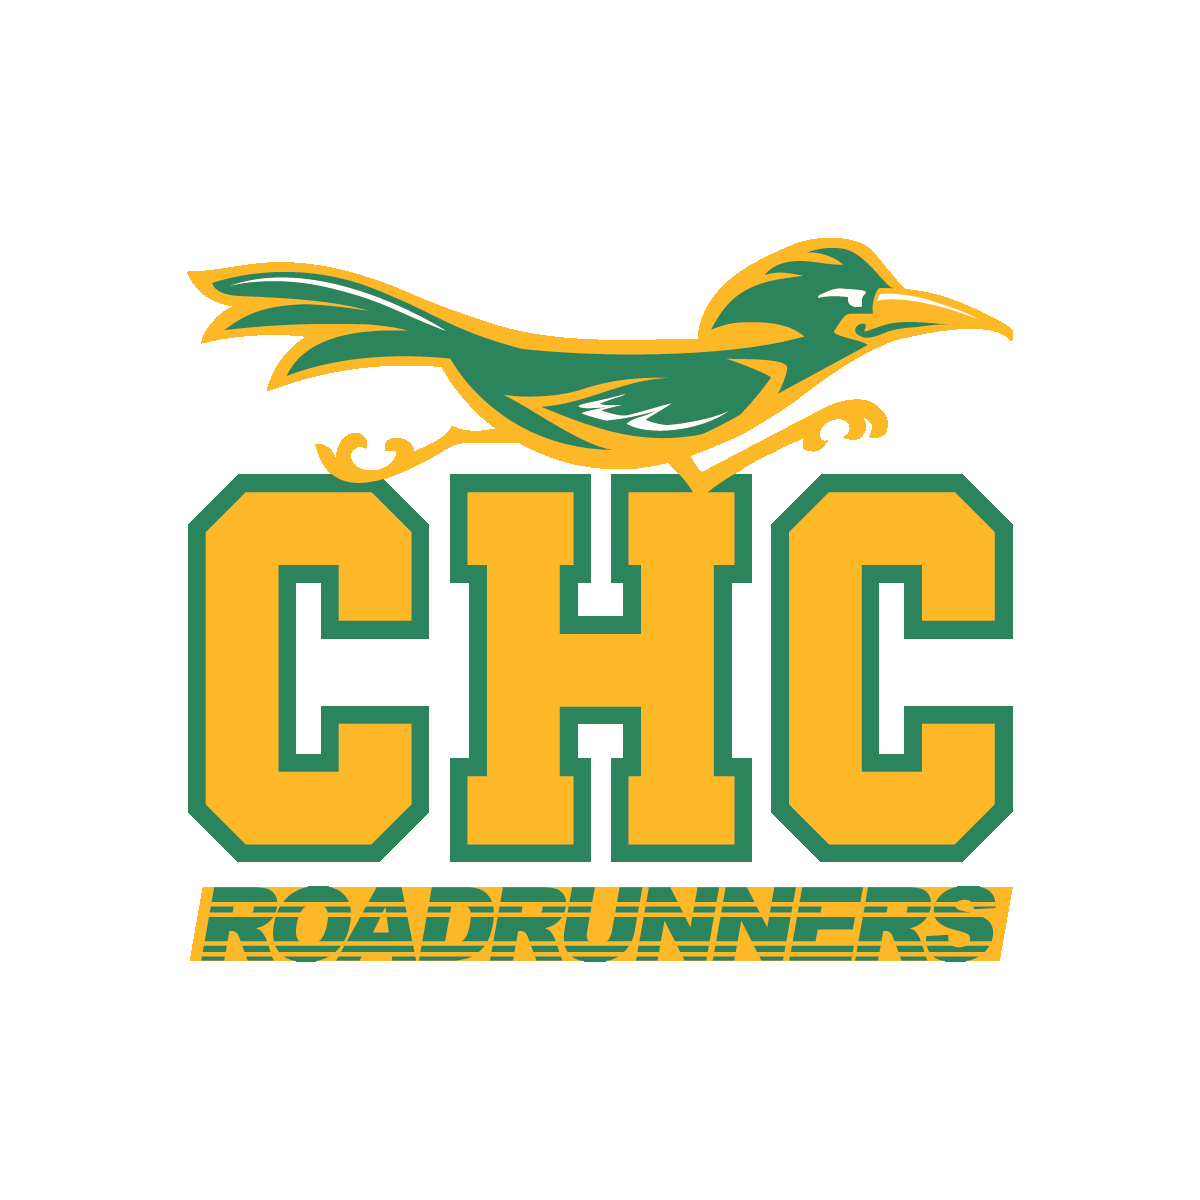 CHC Roadrunners